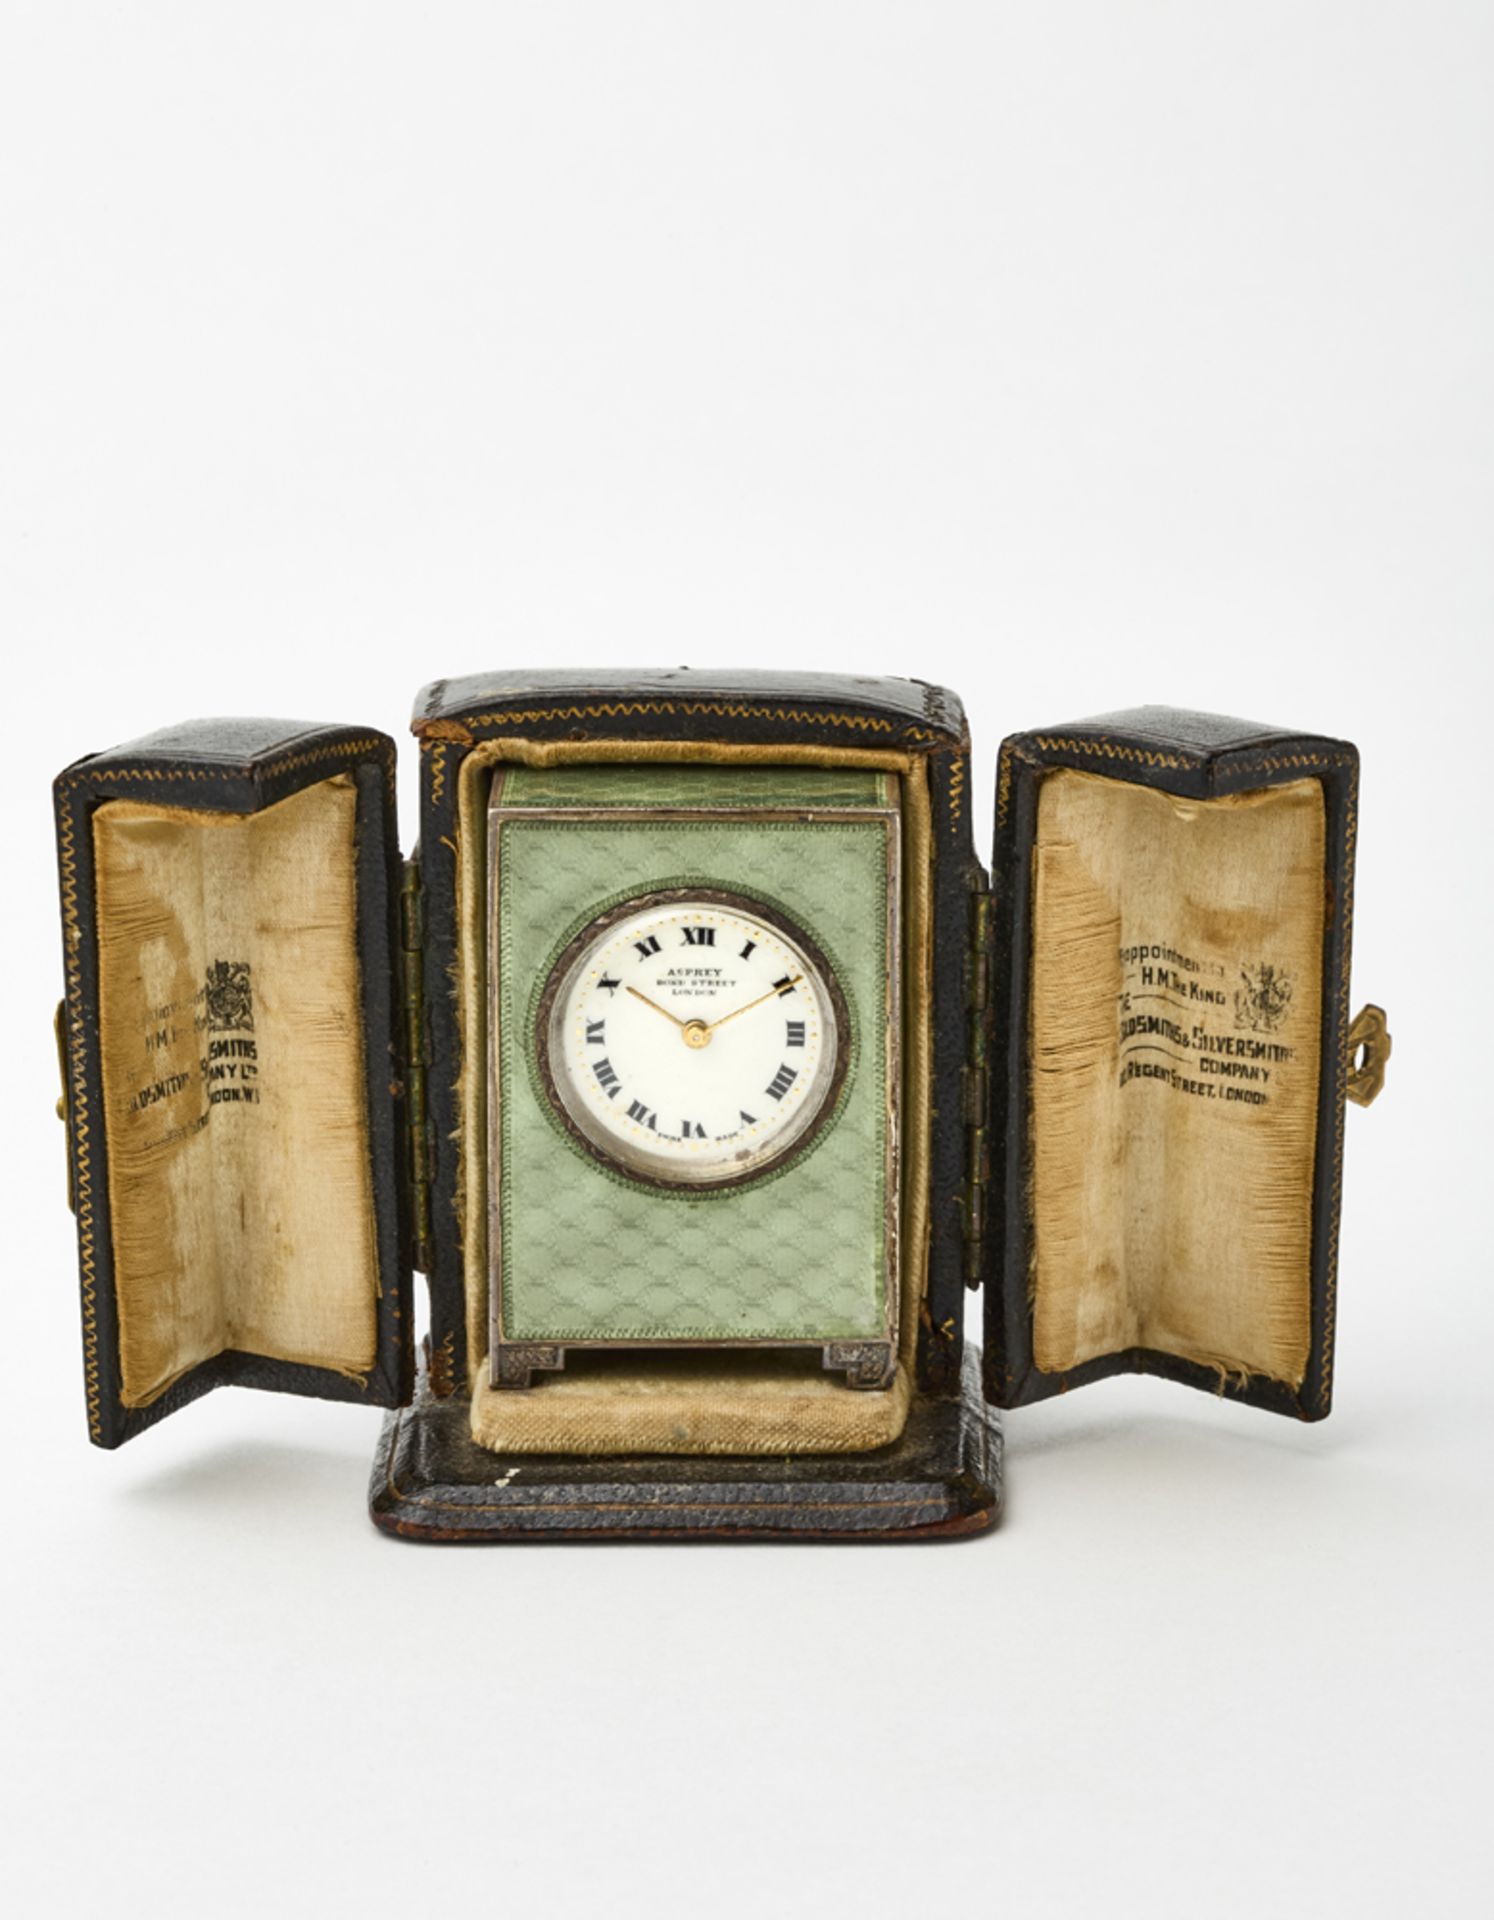 ASPREYSmall silver and guillochÃ© enamel table clock.White dial with Roman numerals signed "Asprey